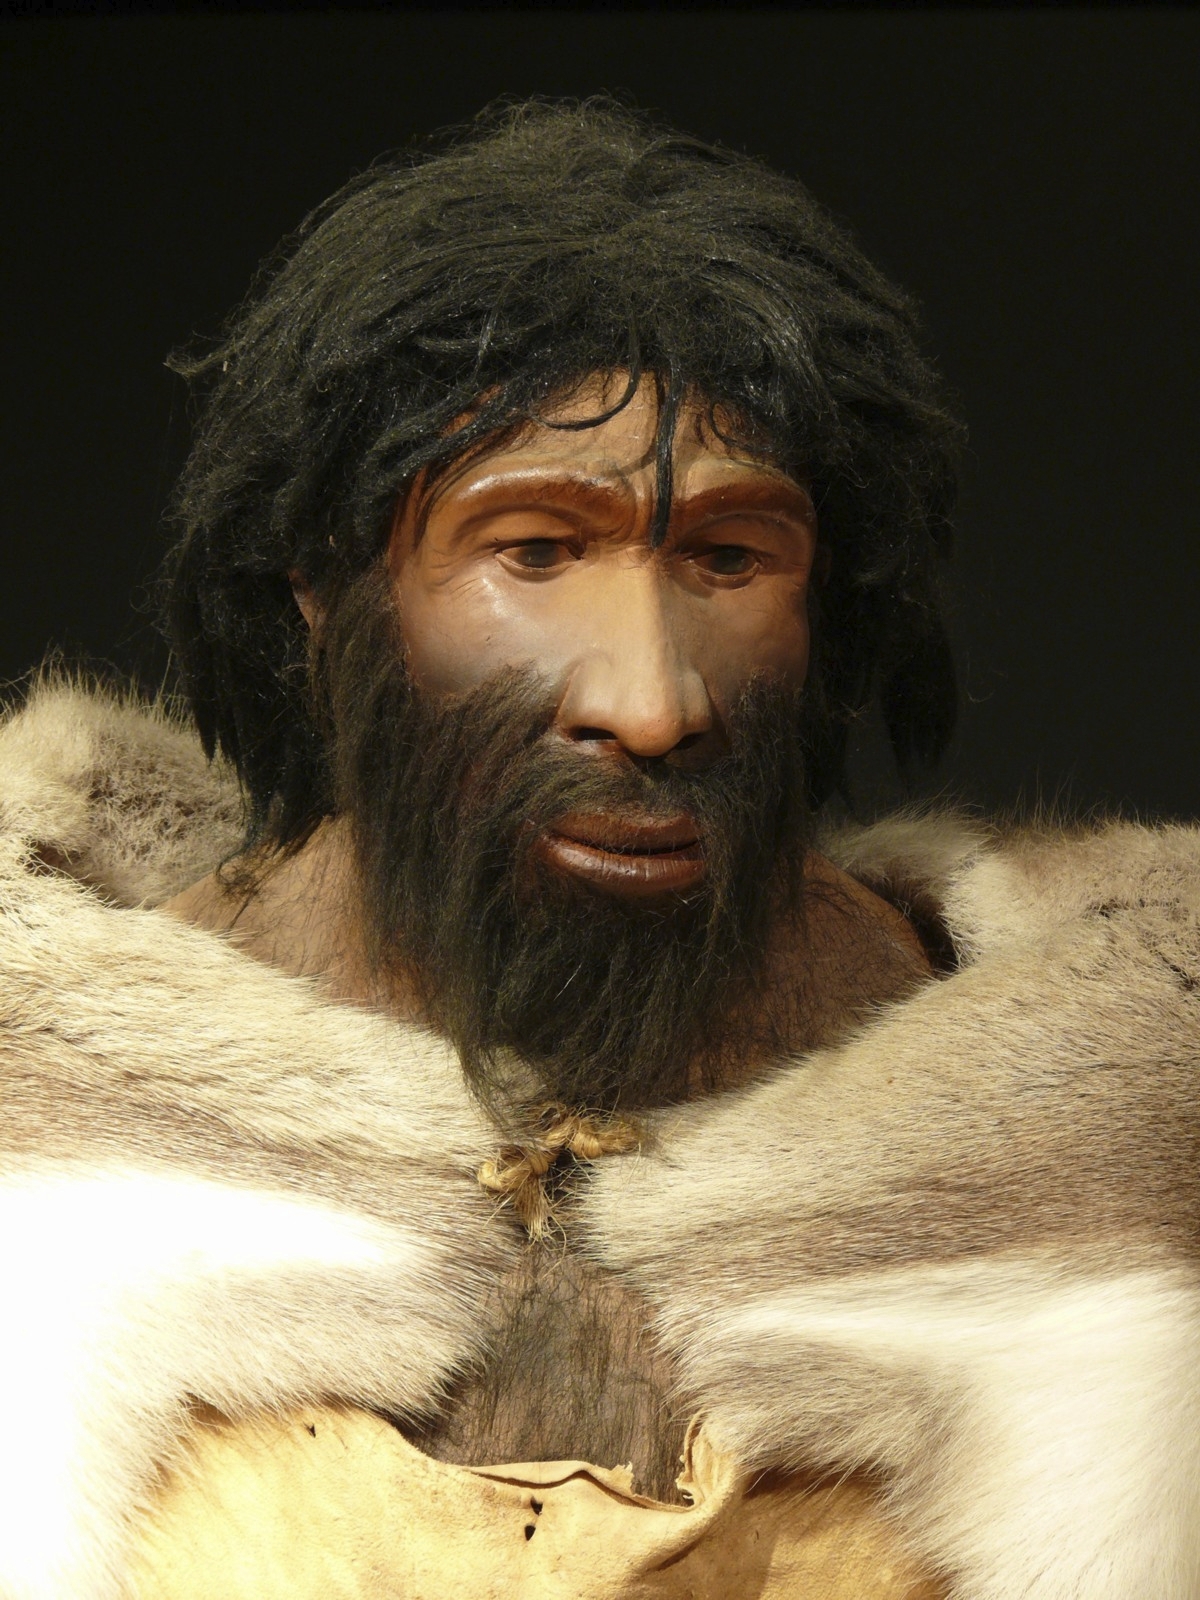 Neandertal man